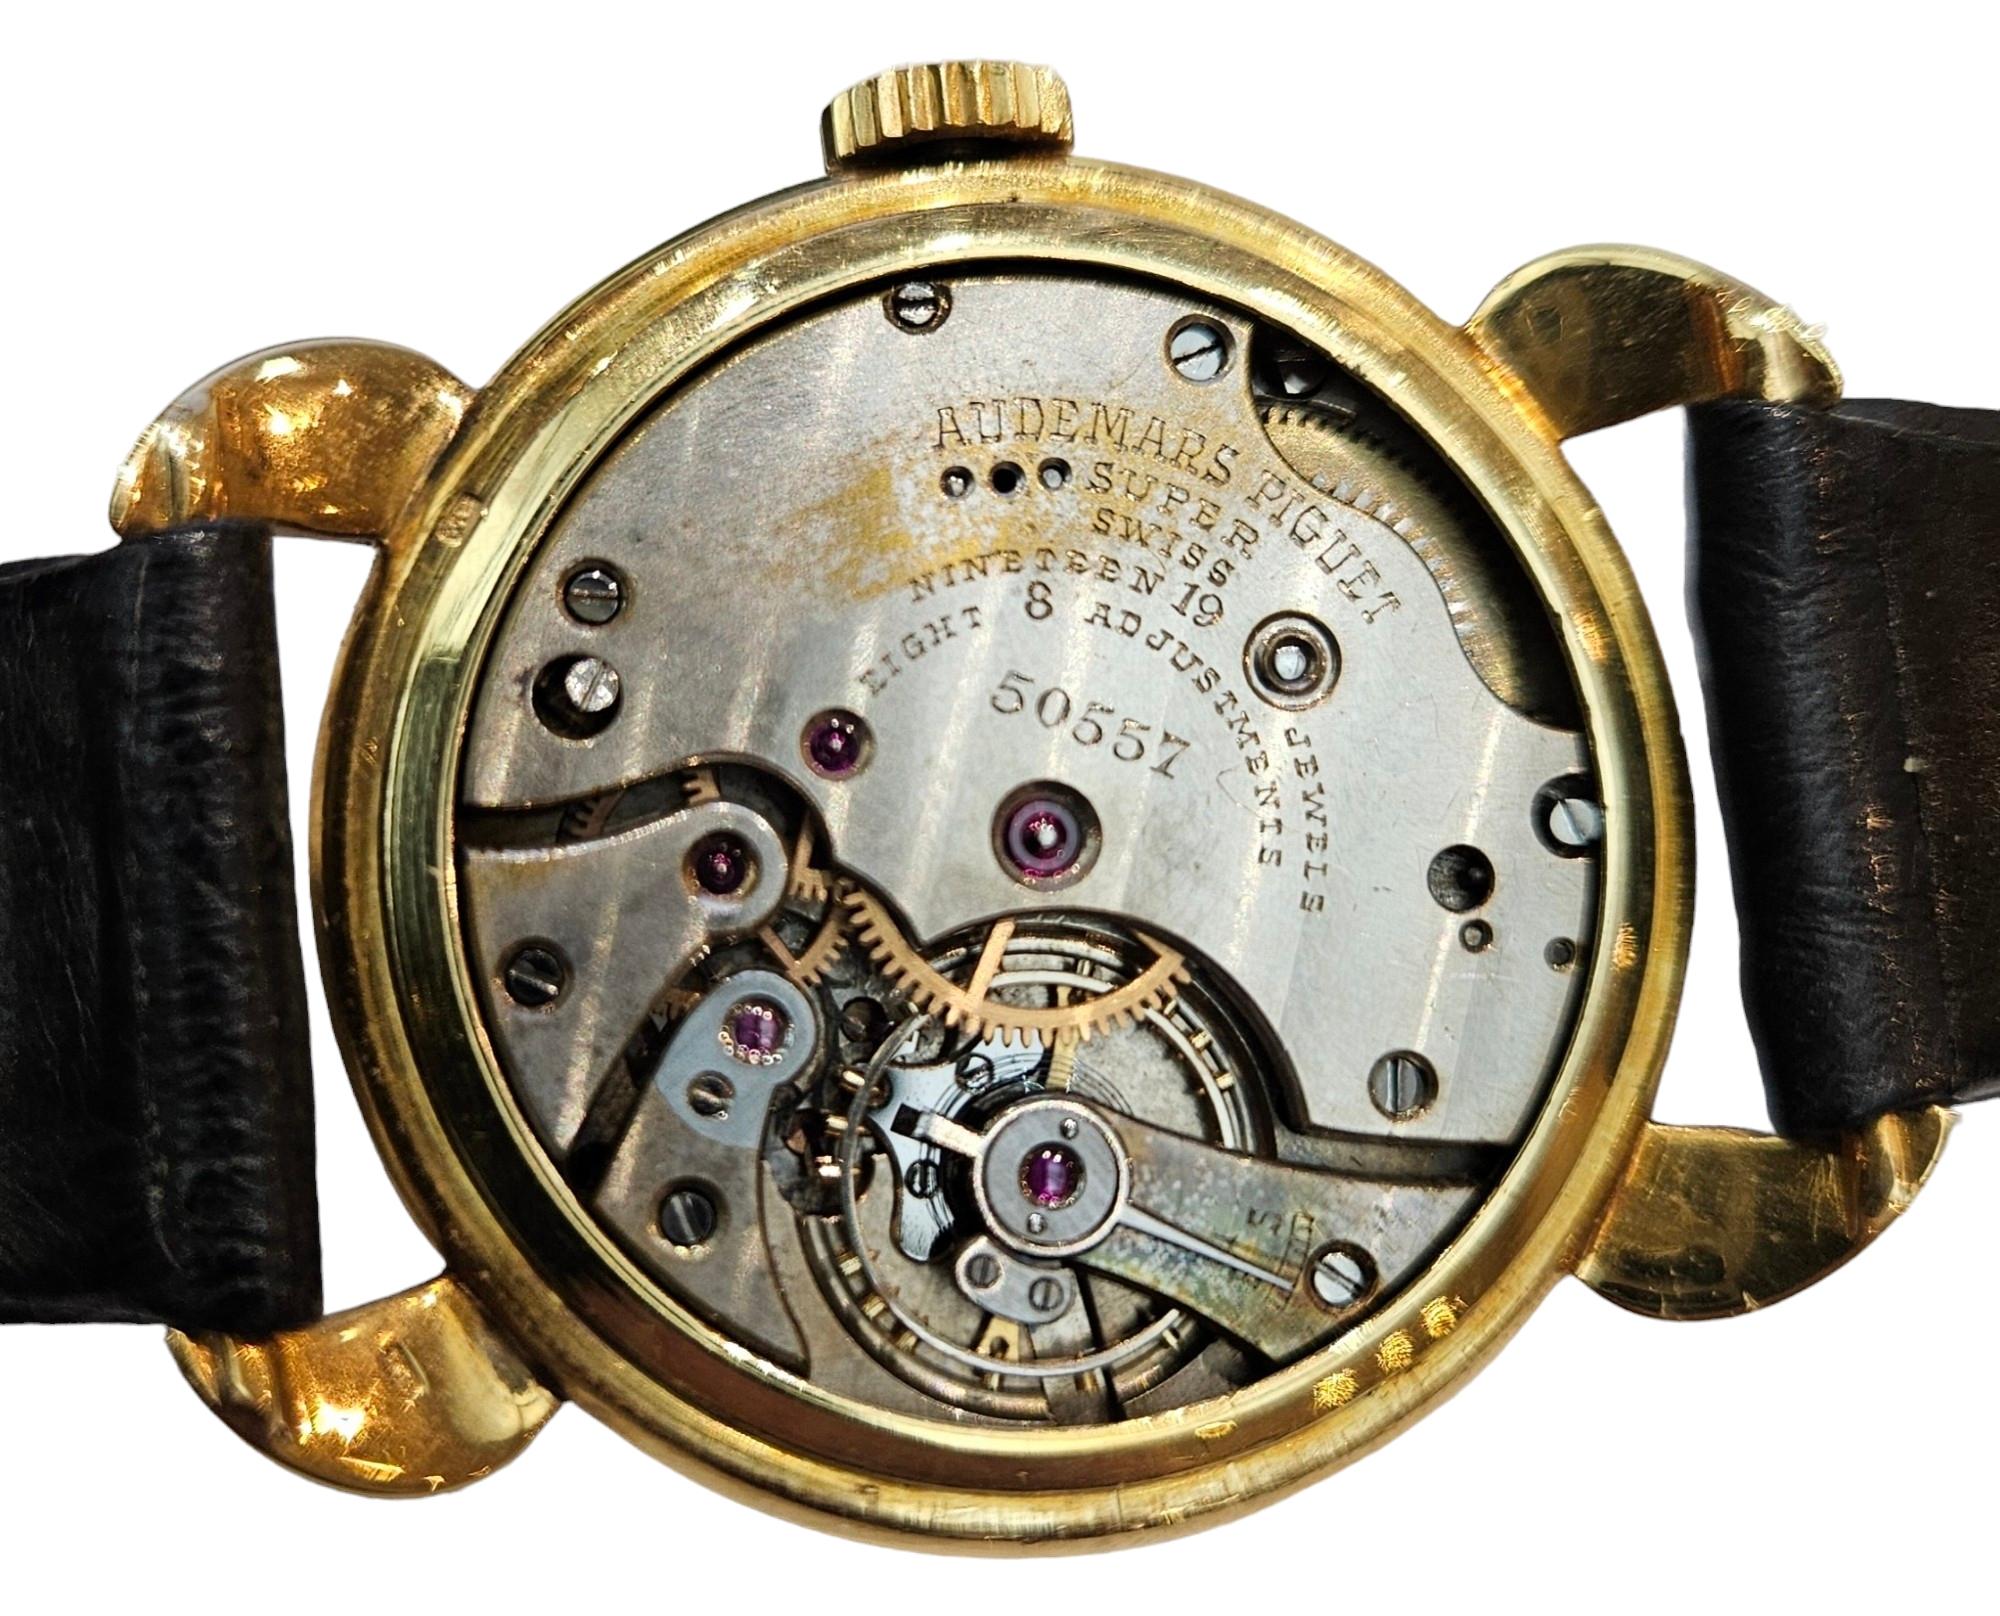 18 Karat Gold Audemars Piguet Calatrava Vintage Seltene Sammler-Armbanduhr 1940er Jahre im Angebot 8